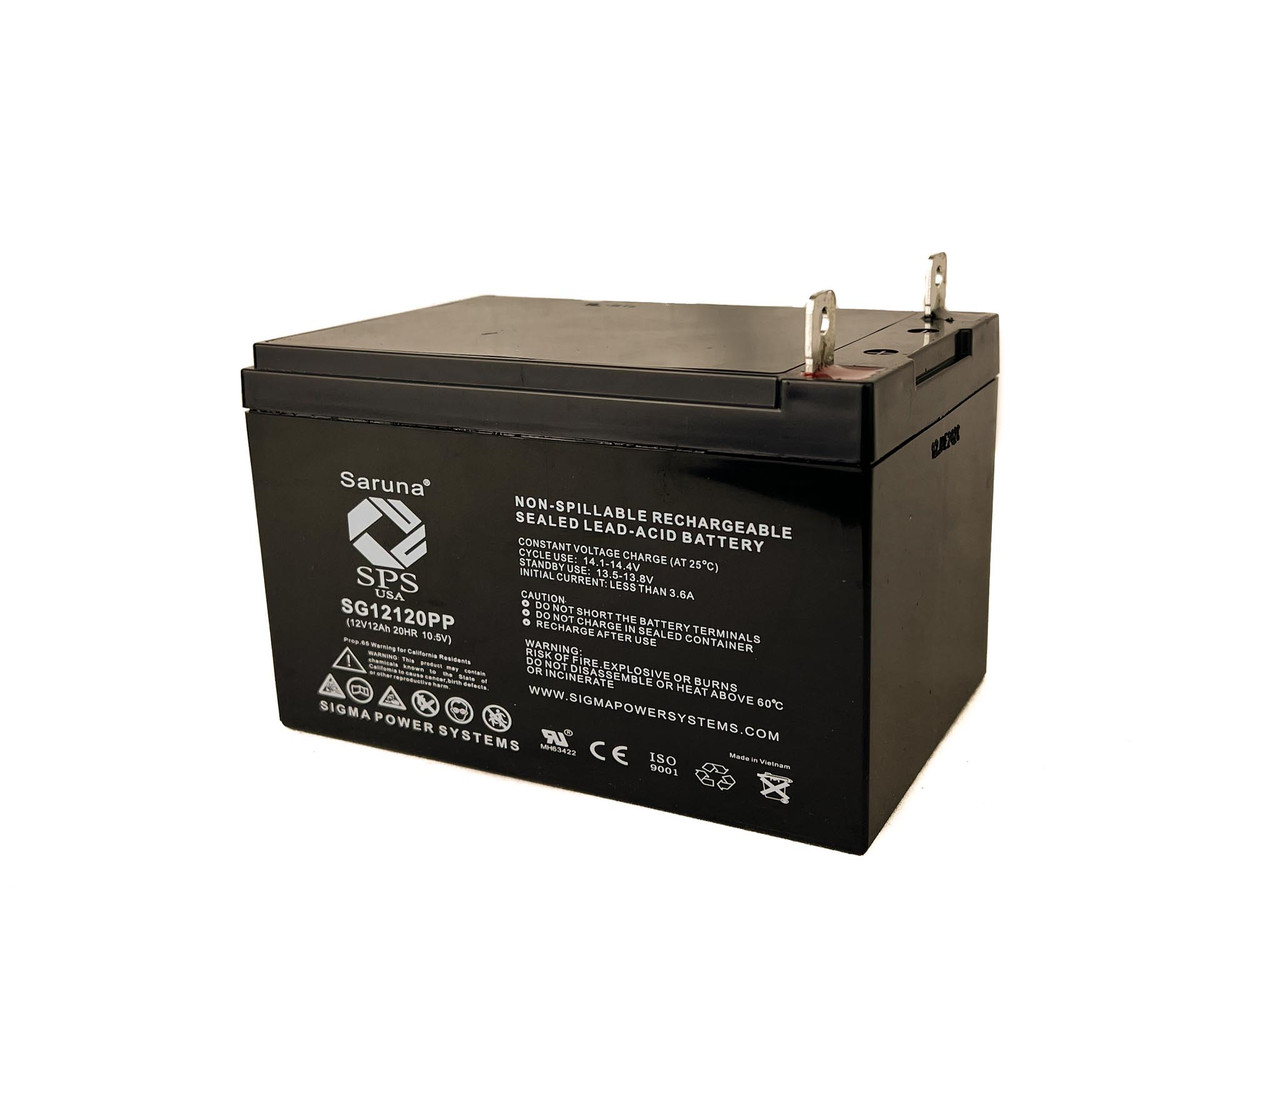 Raion Power RG12120PP Replacement Battery for Diehard 750 (12Ah Battery)